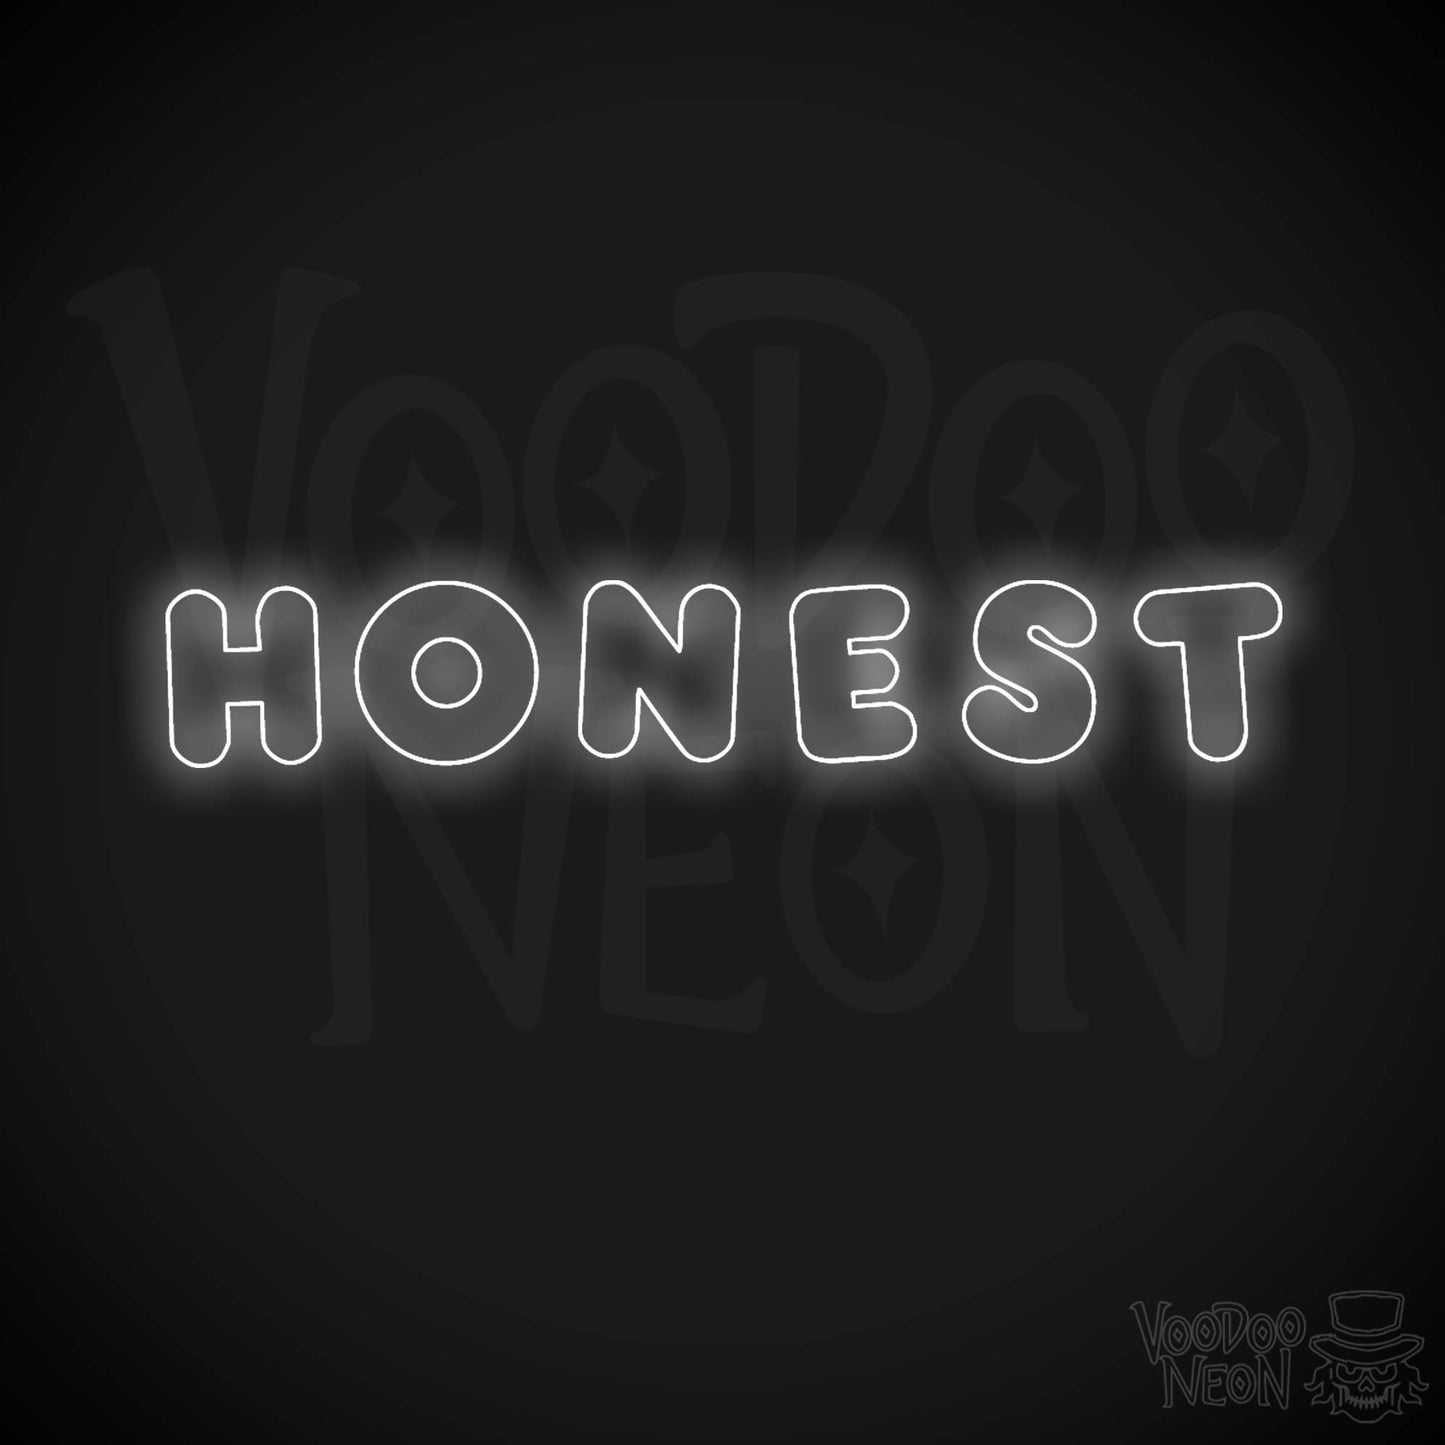 Honest Neon Sign - Neon Honest Sign - LED Neon Wall Art - Color White